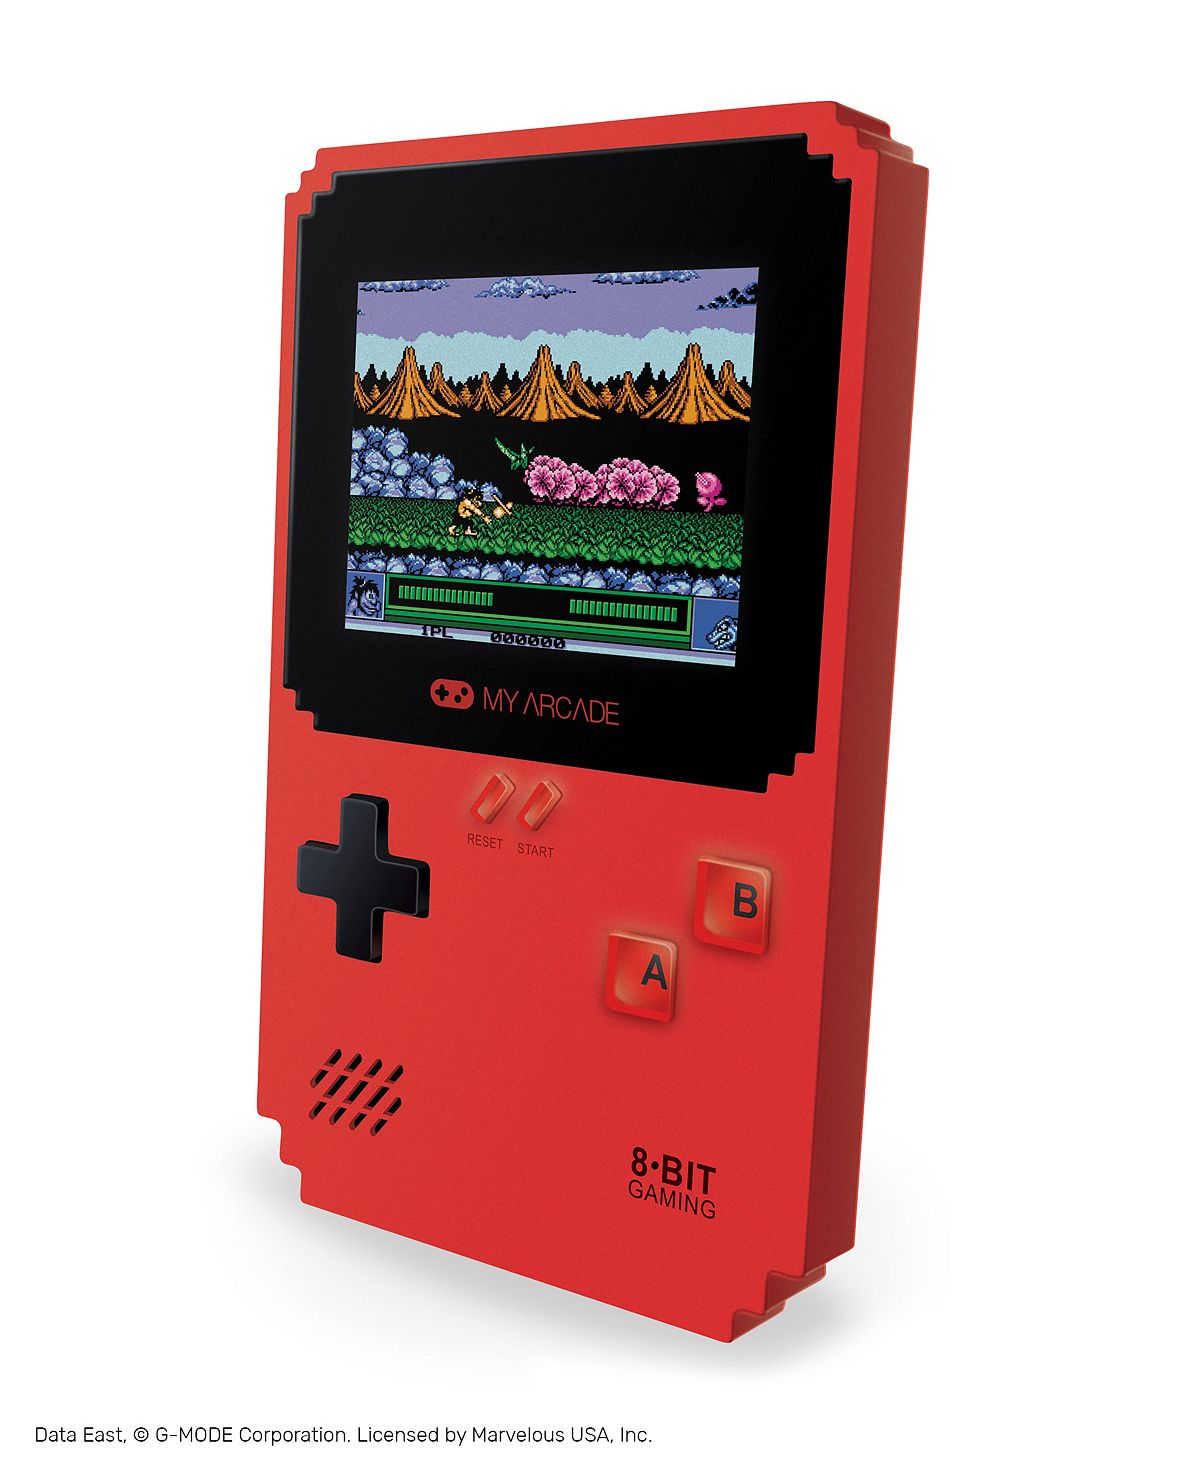 My Arcade Pixel Classic Red